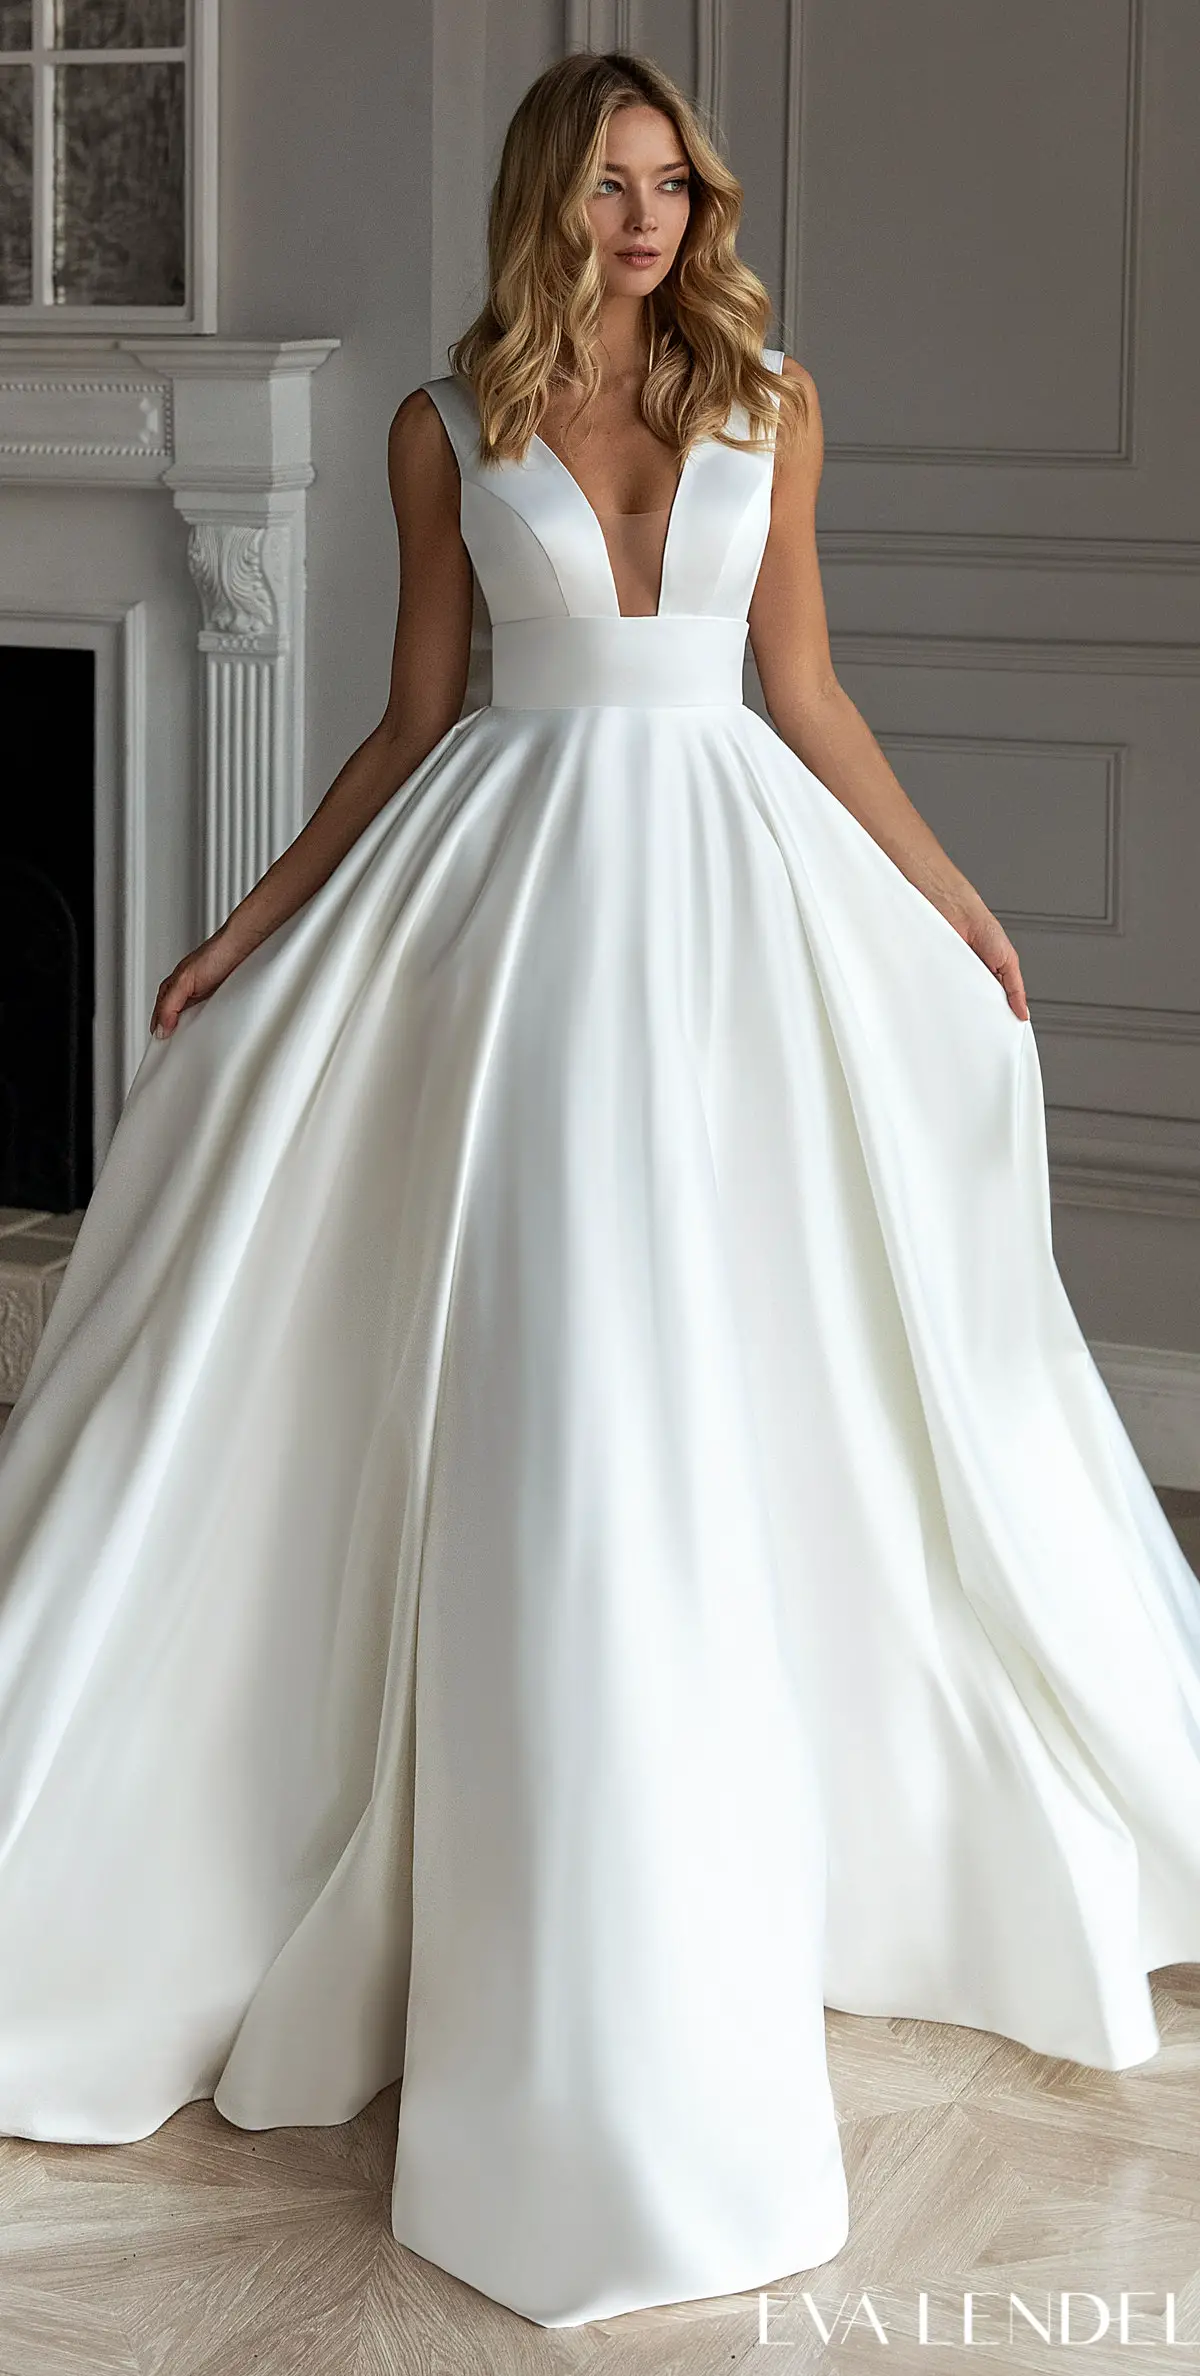 Eva Lendel Wedding Dresses 2021- Less is More Collection -Valery